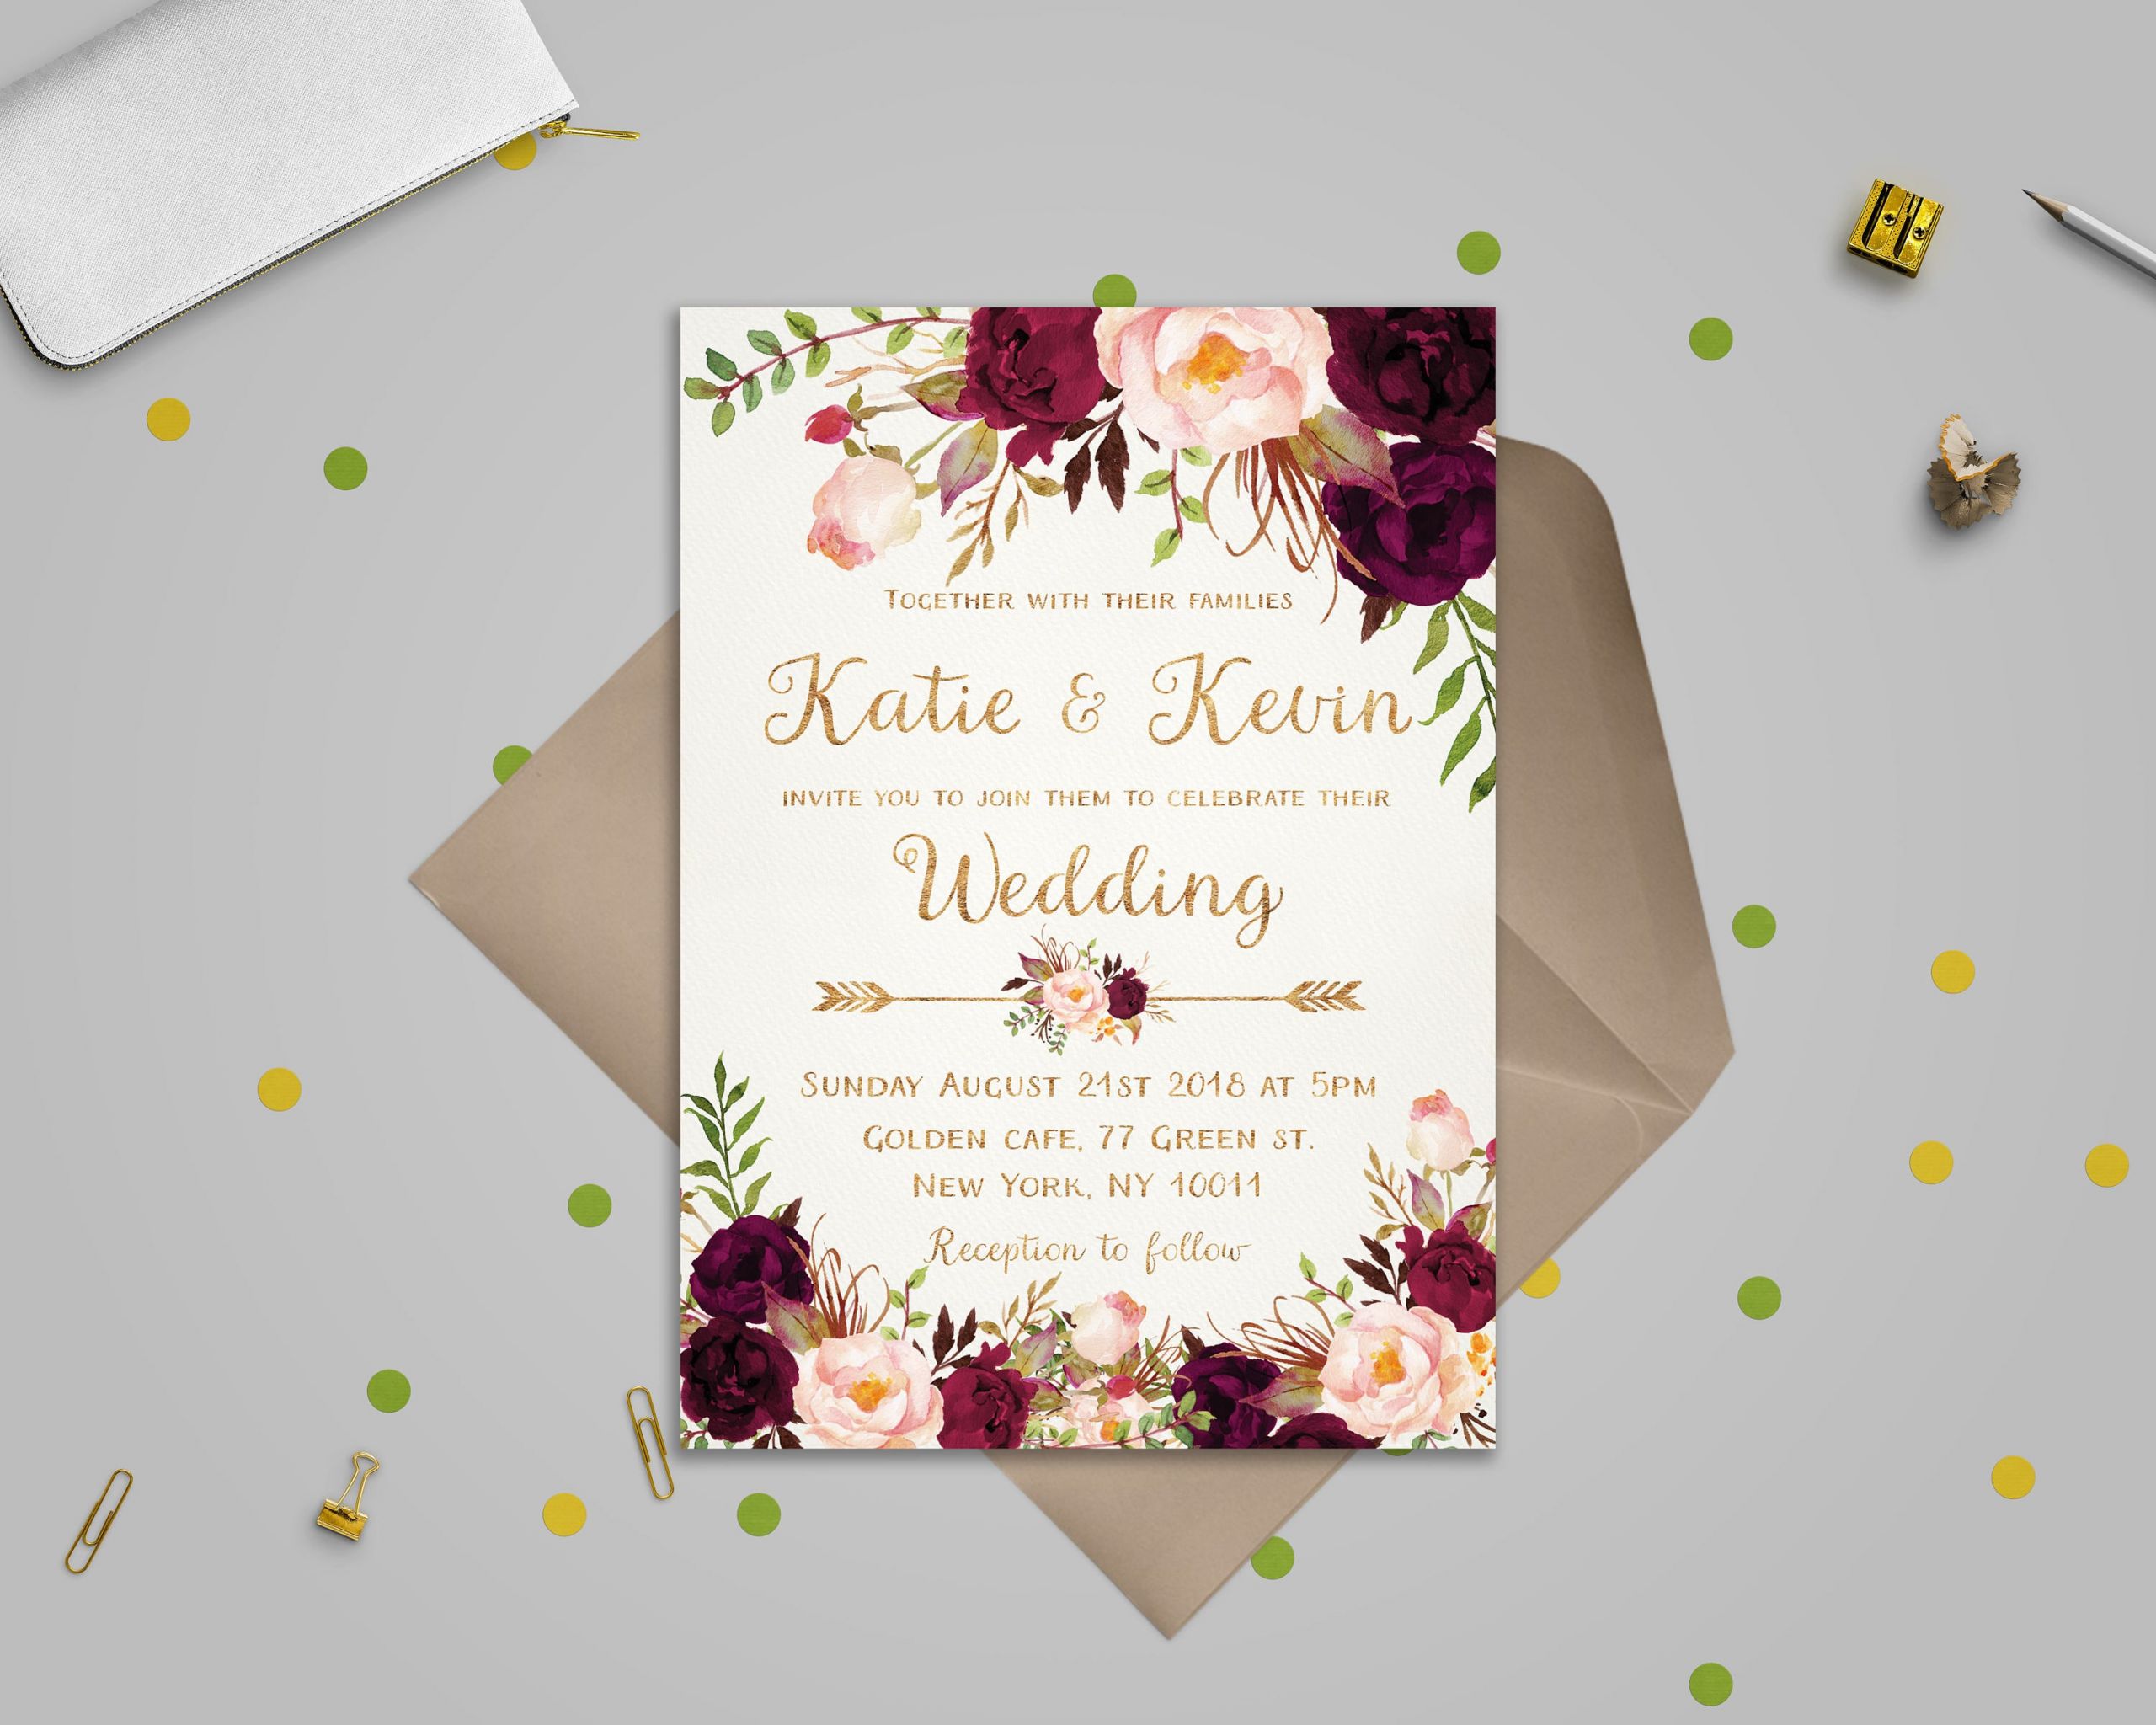 Wedding Invitation Design Online
 Floral wedding invitation template Wedding invitation